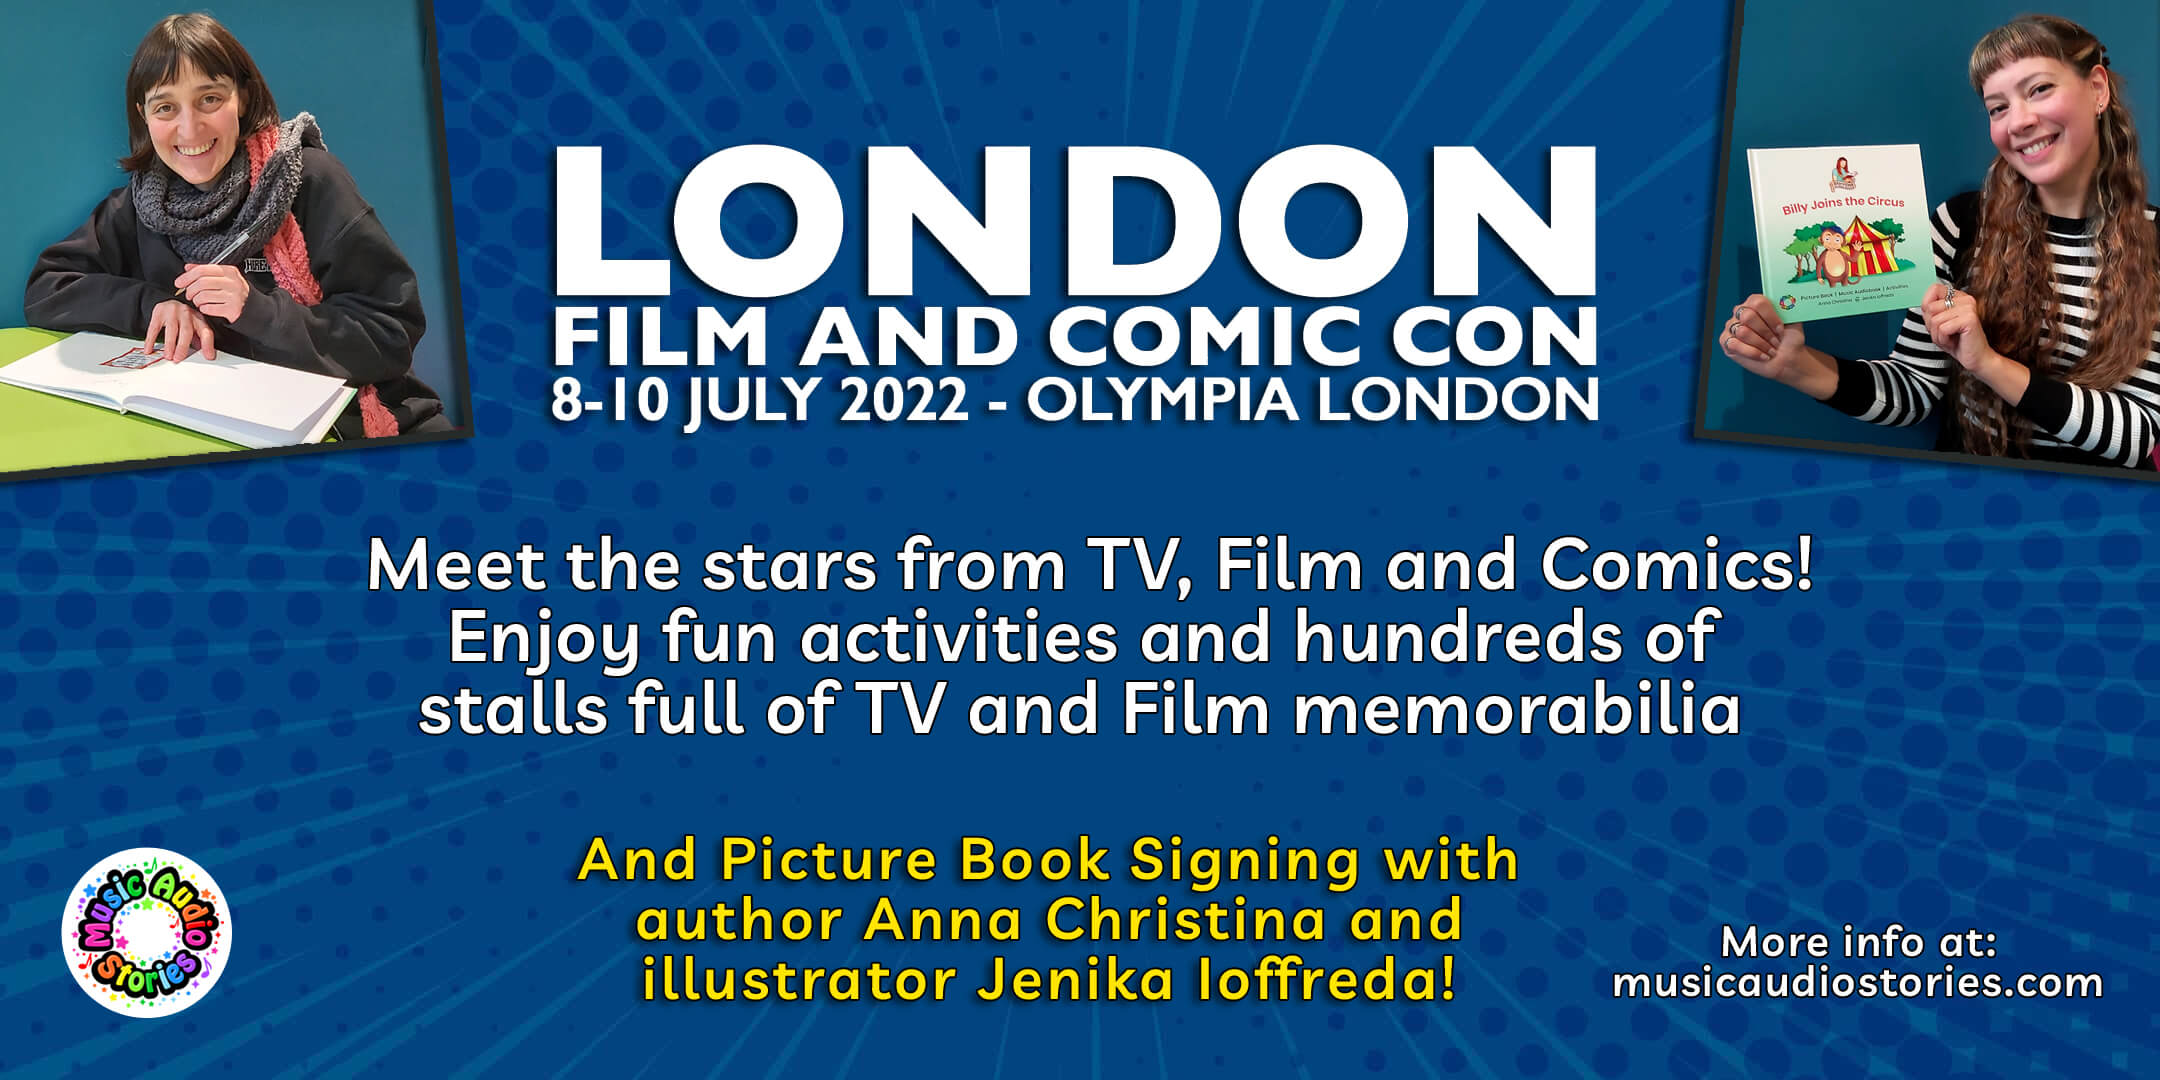 Author Anna Christina and illustrator Jenika Ioffreda at Showmasters London Film & Comic Con at Olympia London banner image